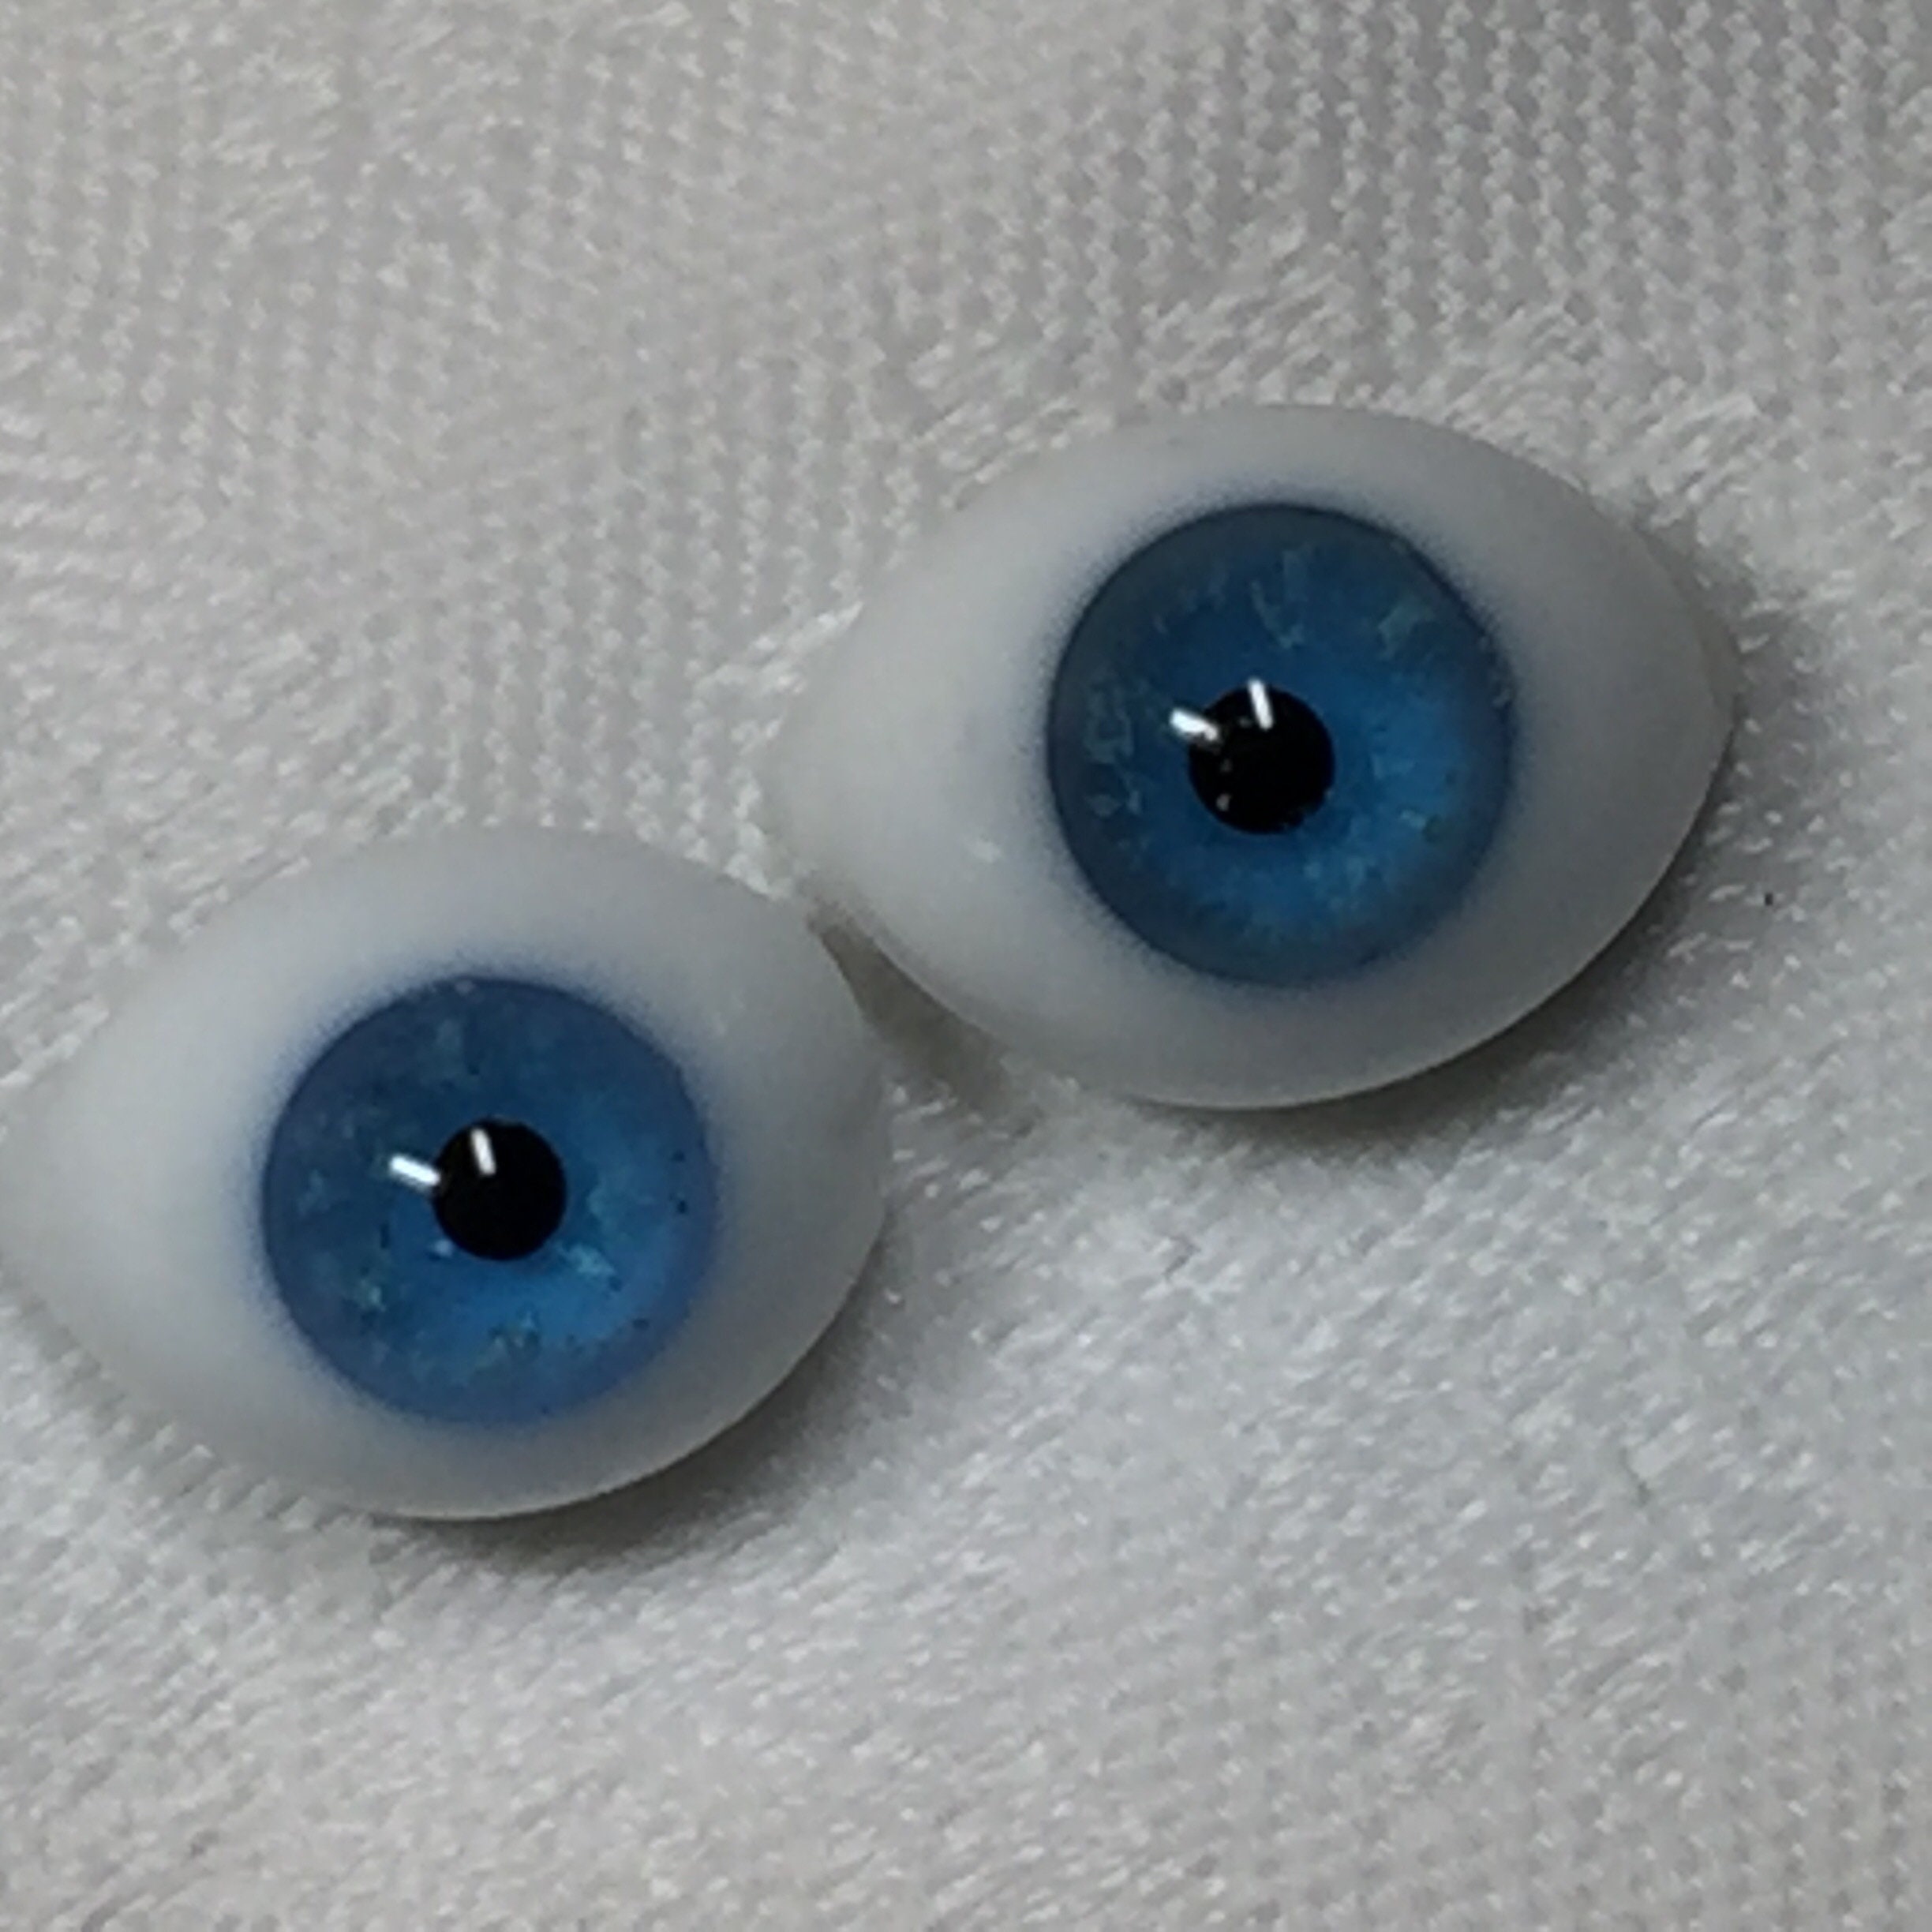 100pcs Simulation Eye Props Doll Making Eyeball Adorns Decorative Glass Eyes, Adult Unisex, Size: 12x10x5CM